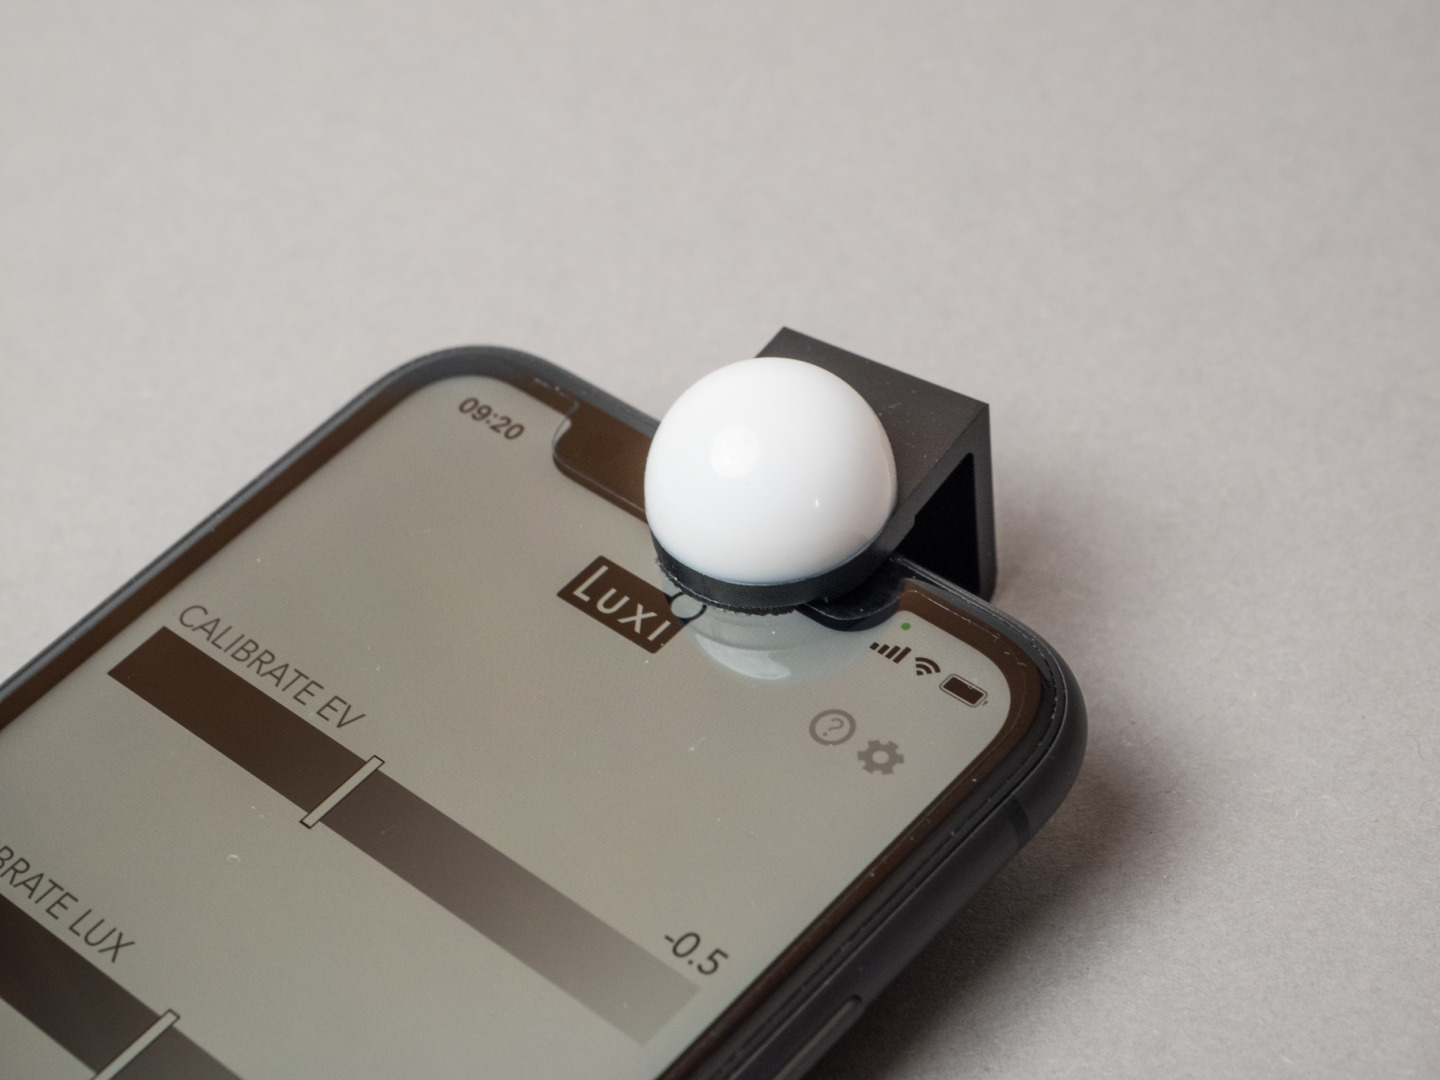 Luxi iOS light metering app